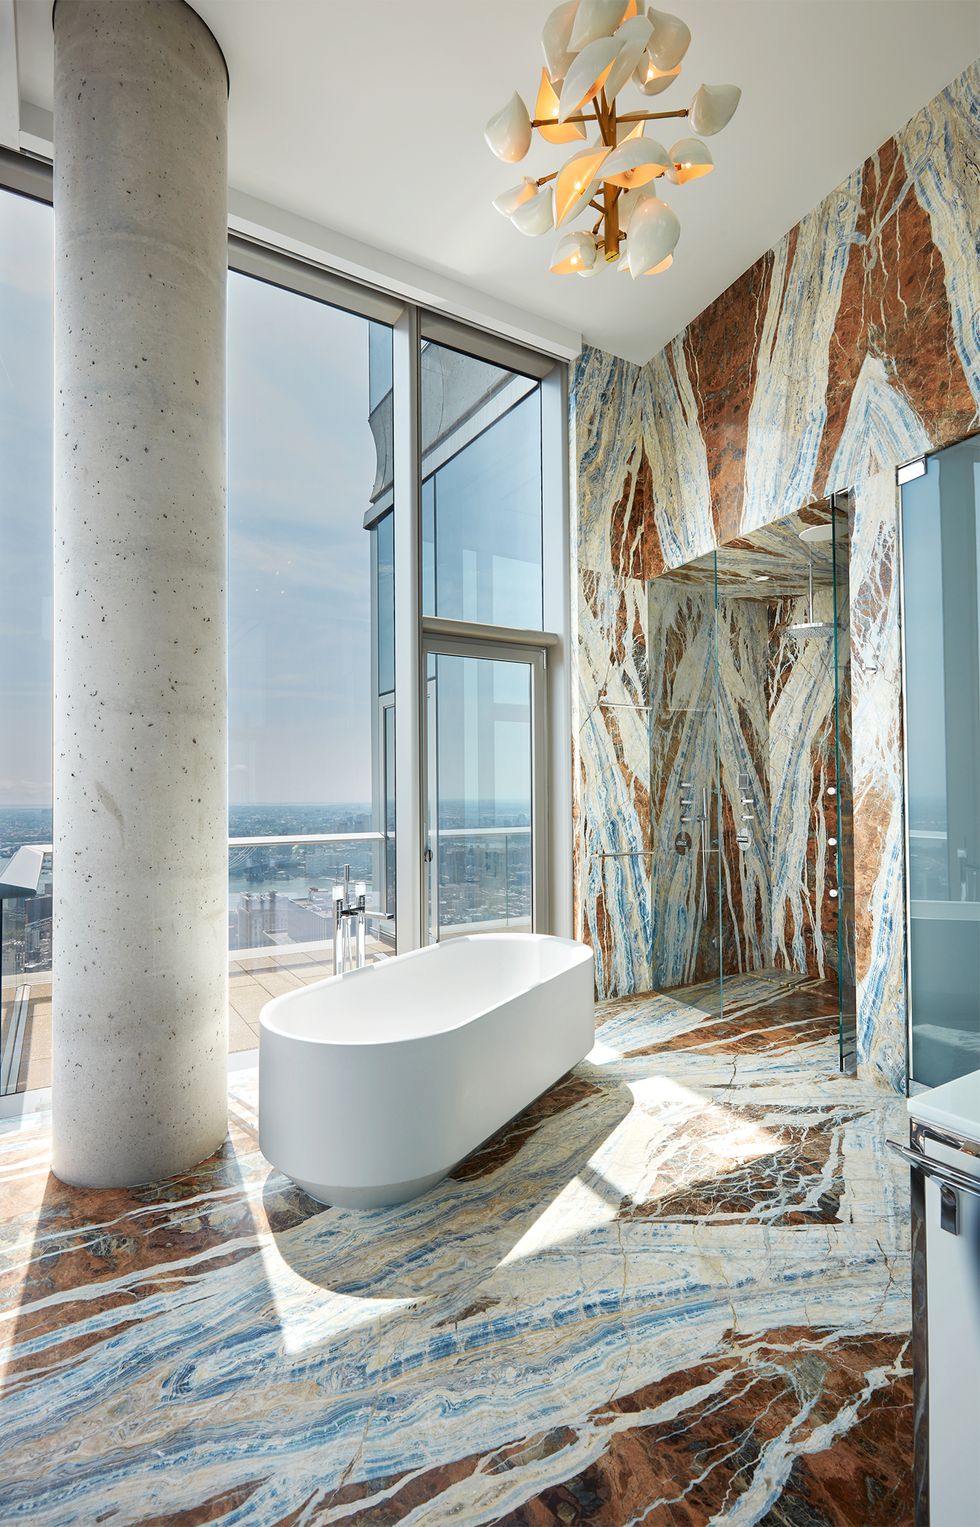 Luxury Bathroom Designs - Timeless to Modern Inspirations - DM Home